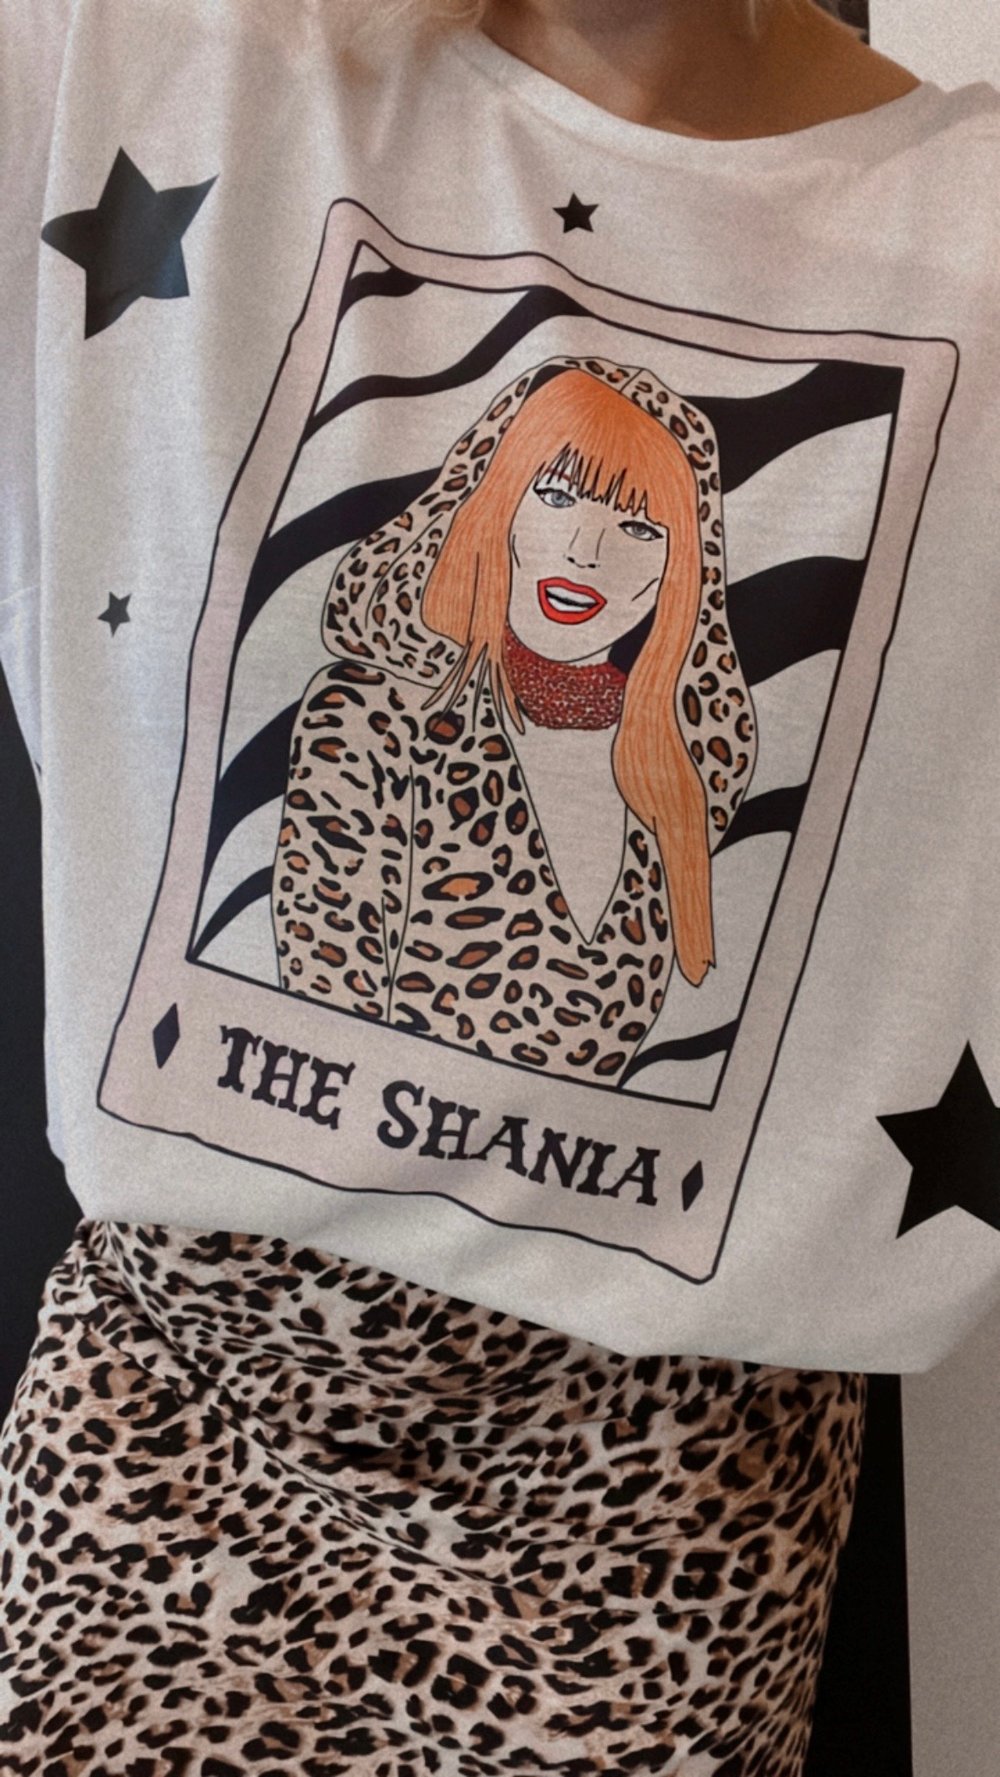 Image of The Shania Tee